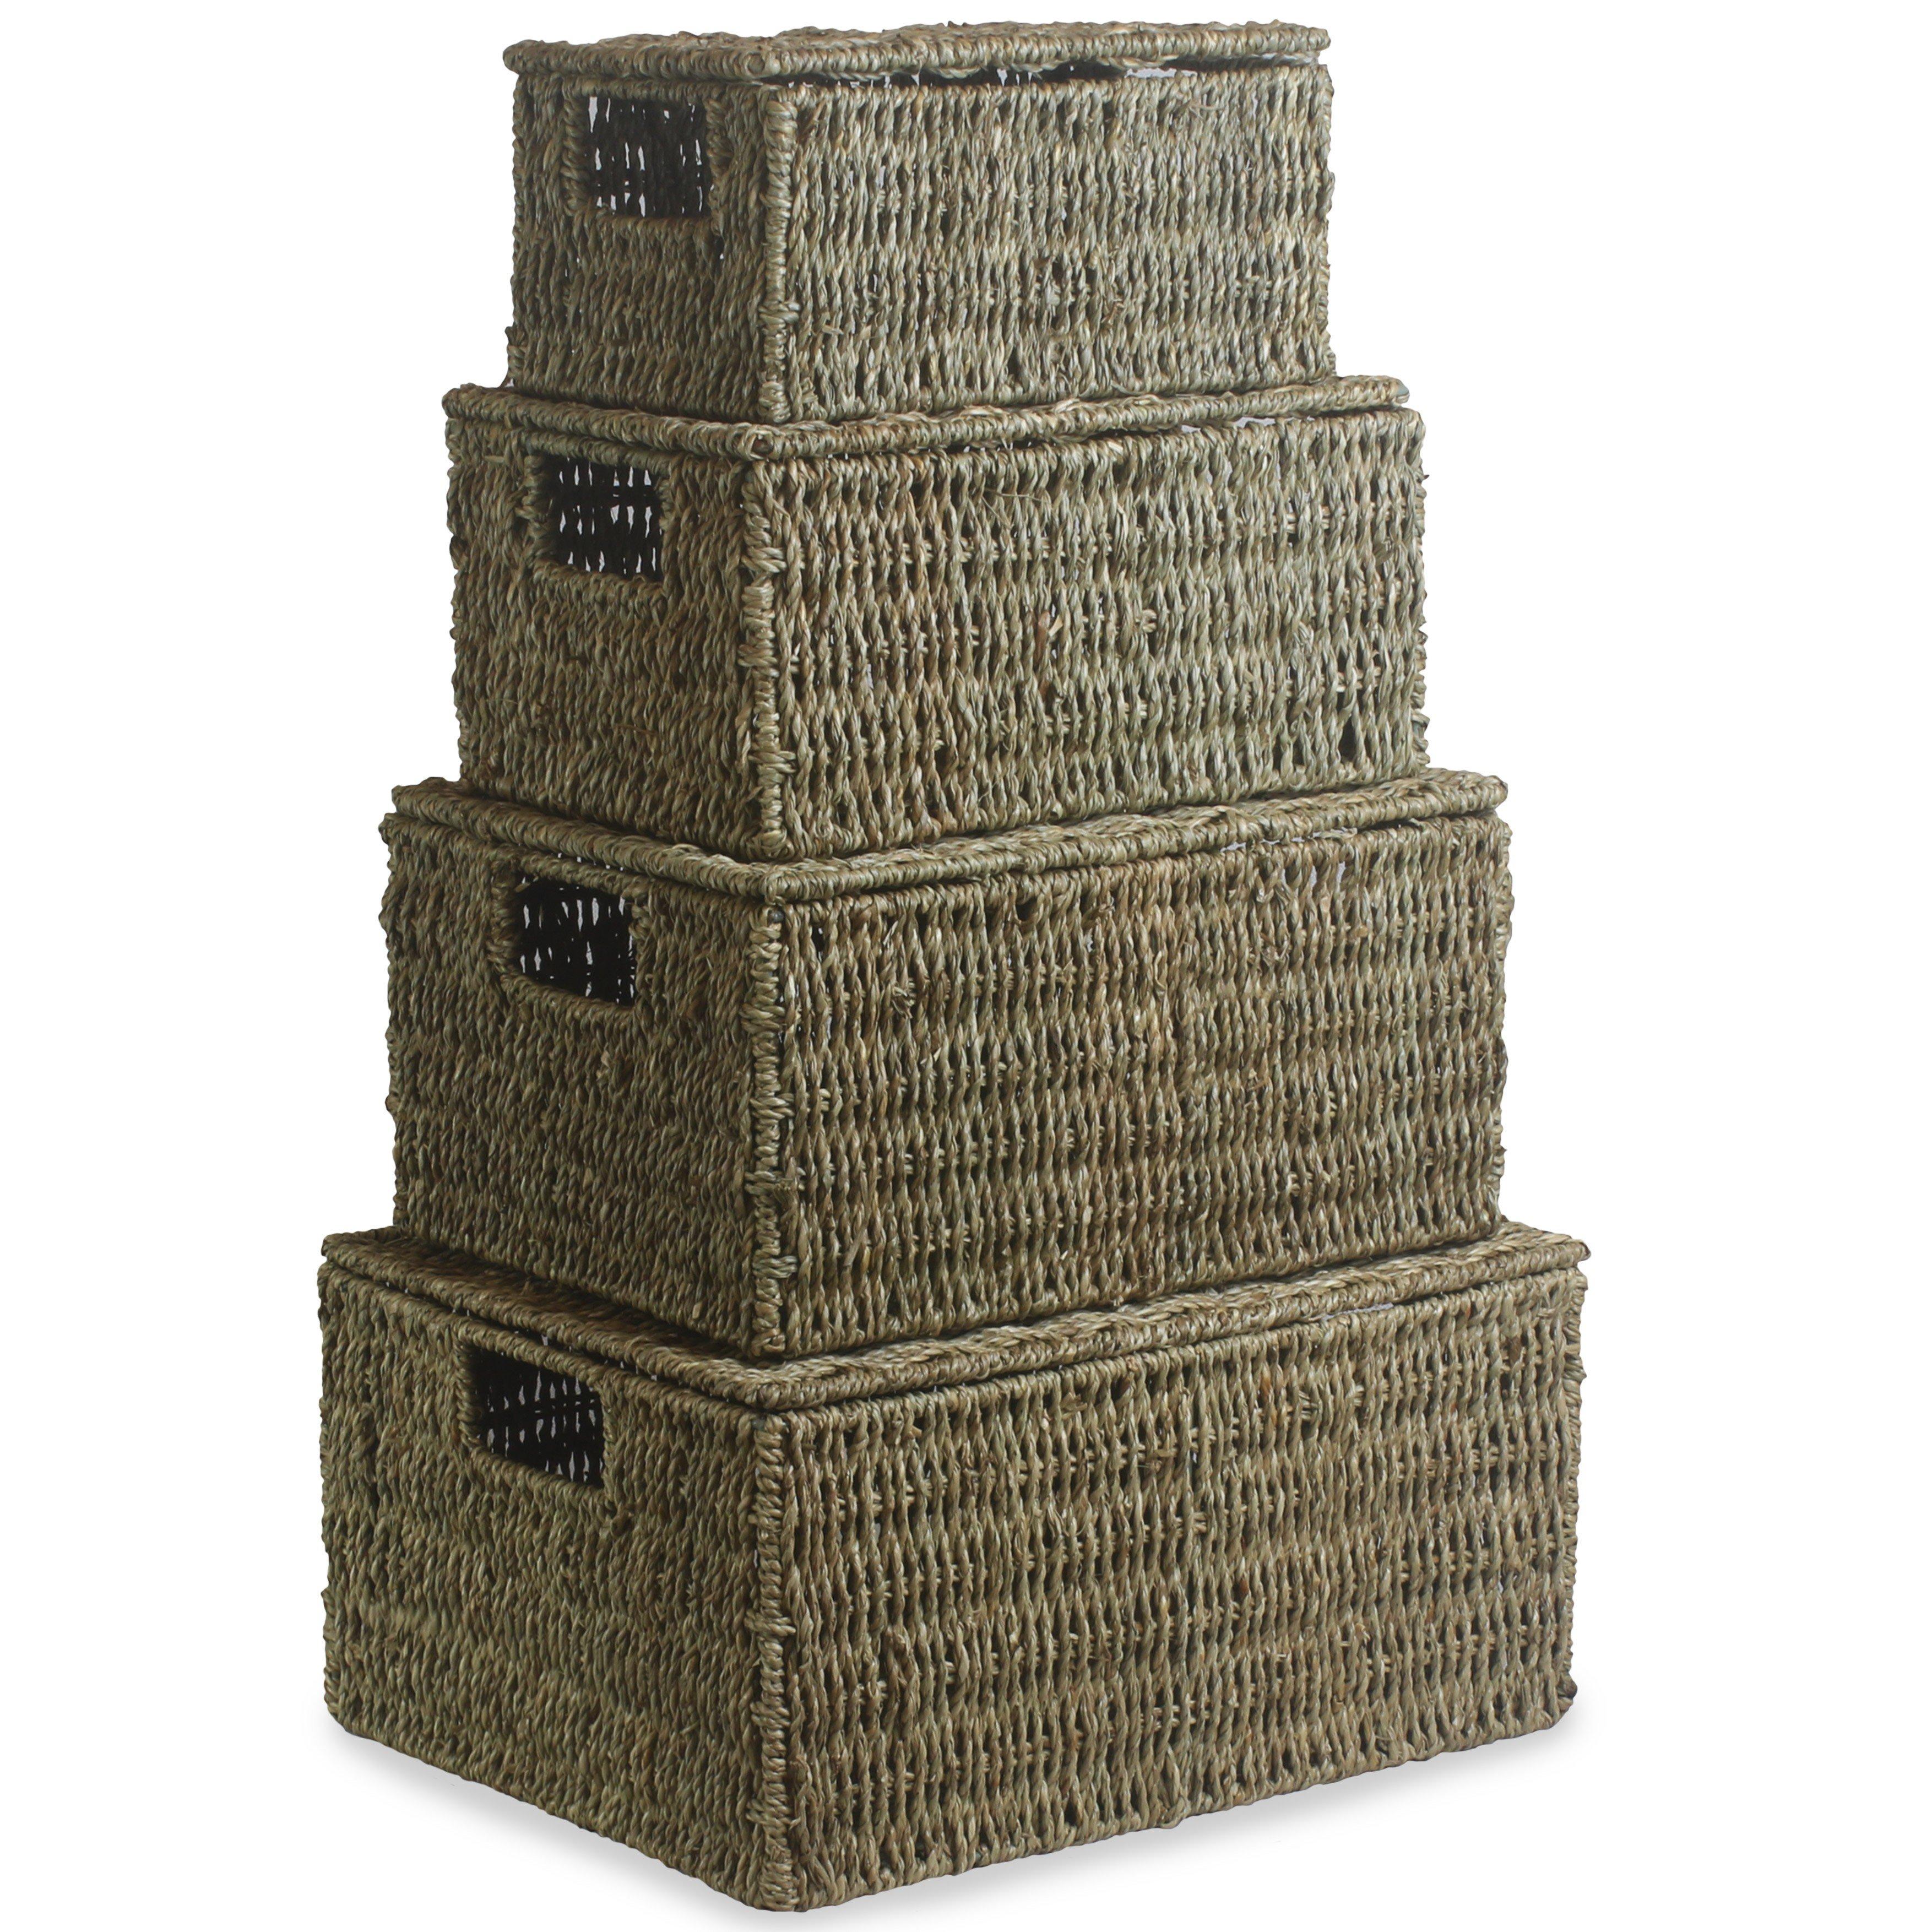 Seagrass Set or 4 Seagrass Storage Baskets